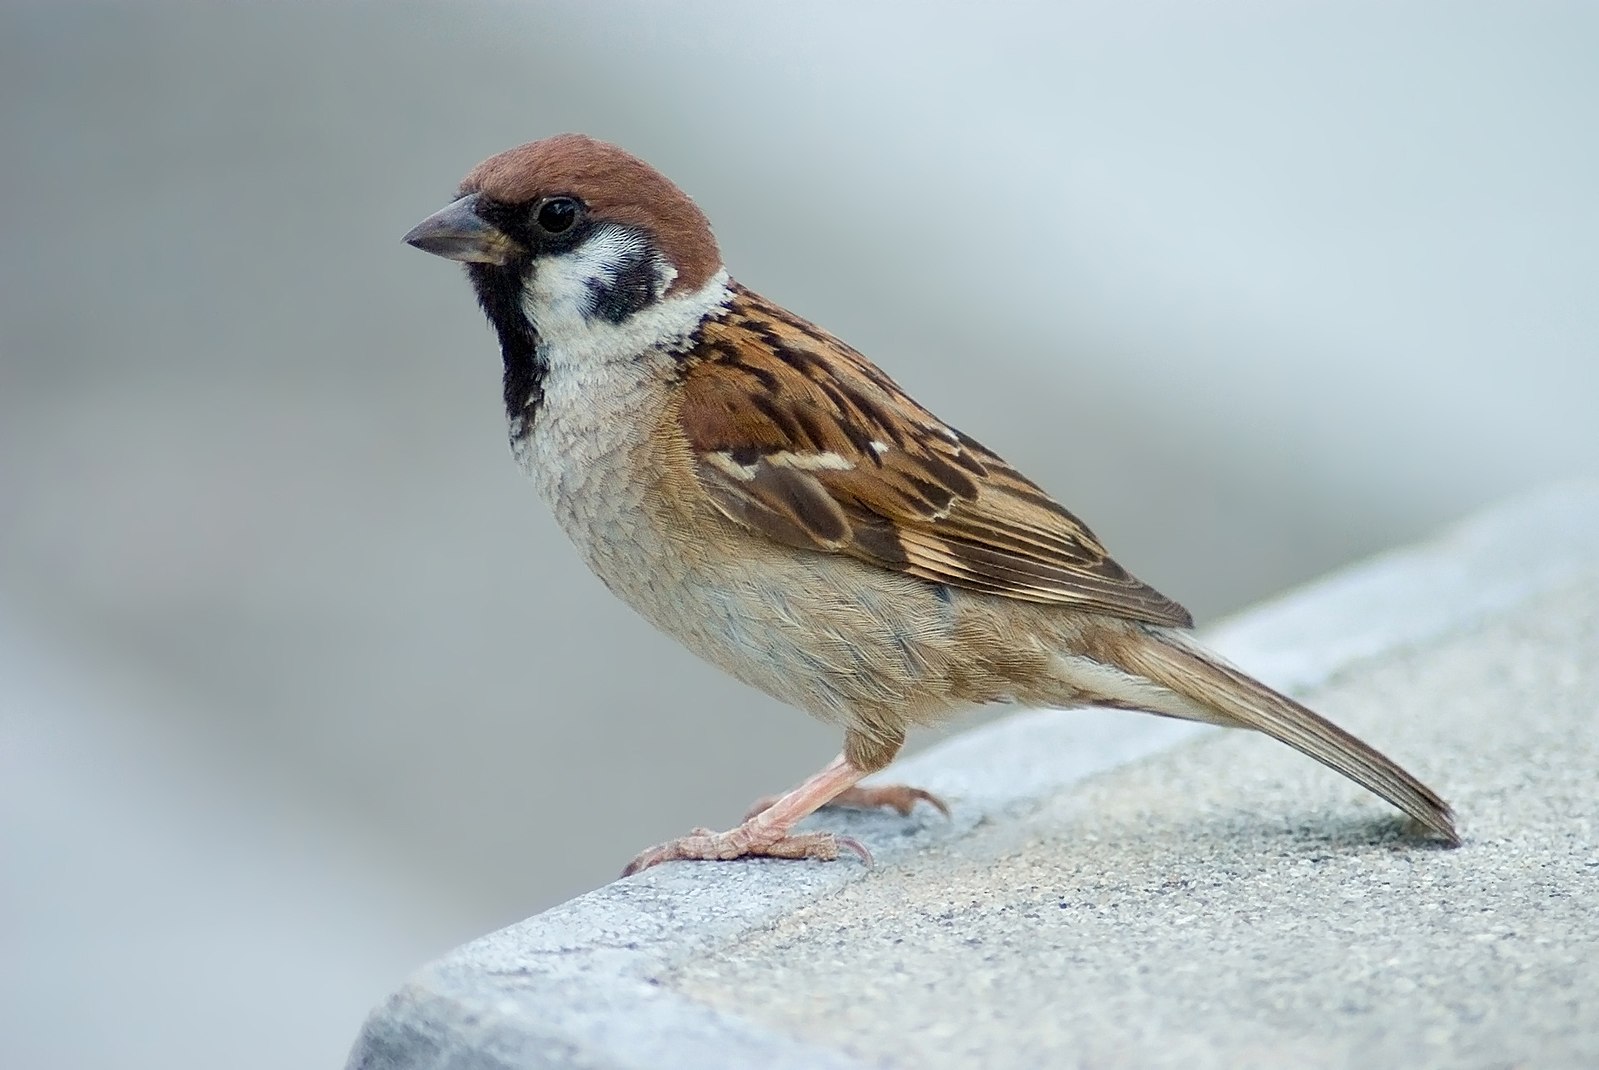 Suzume (Sparrows)